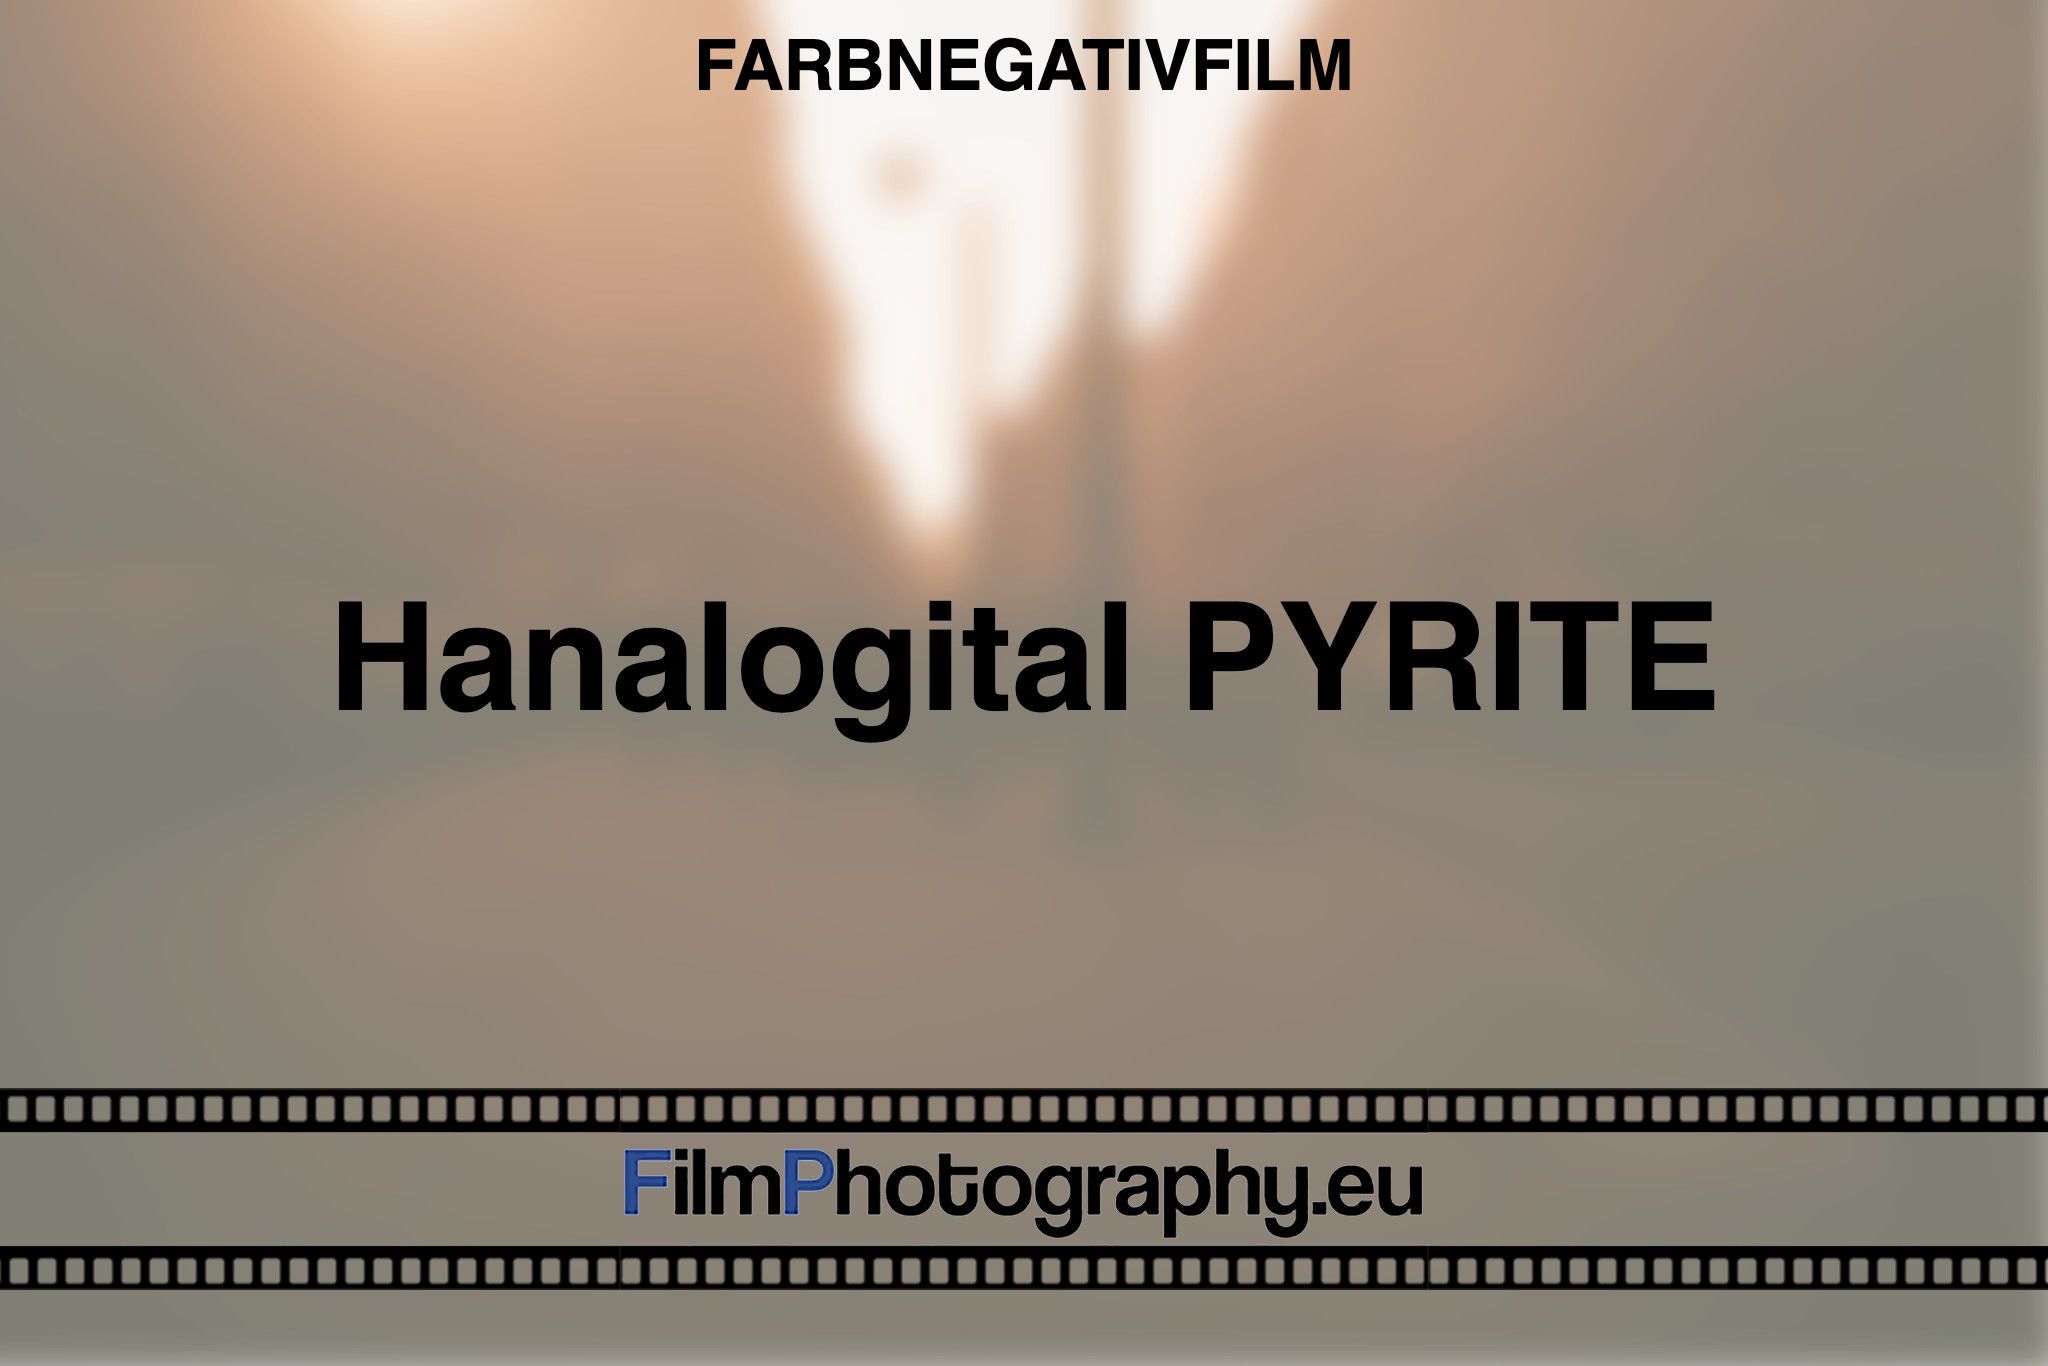 hanalogital-pyrite-farbnegativfilm-bnv